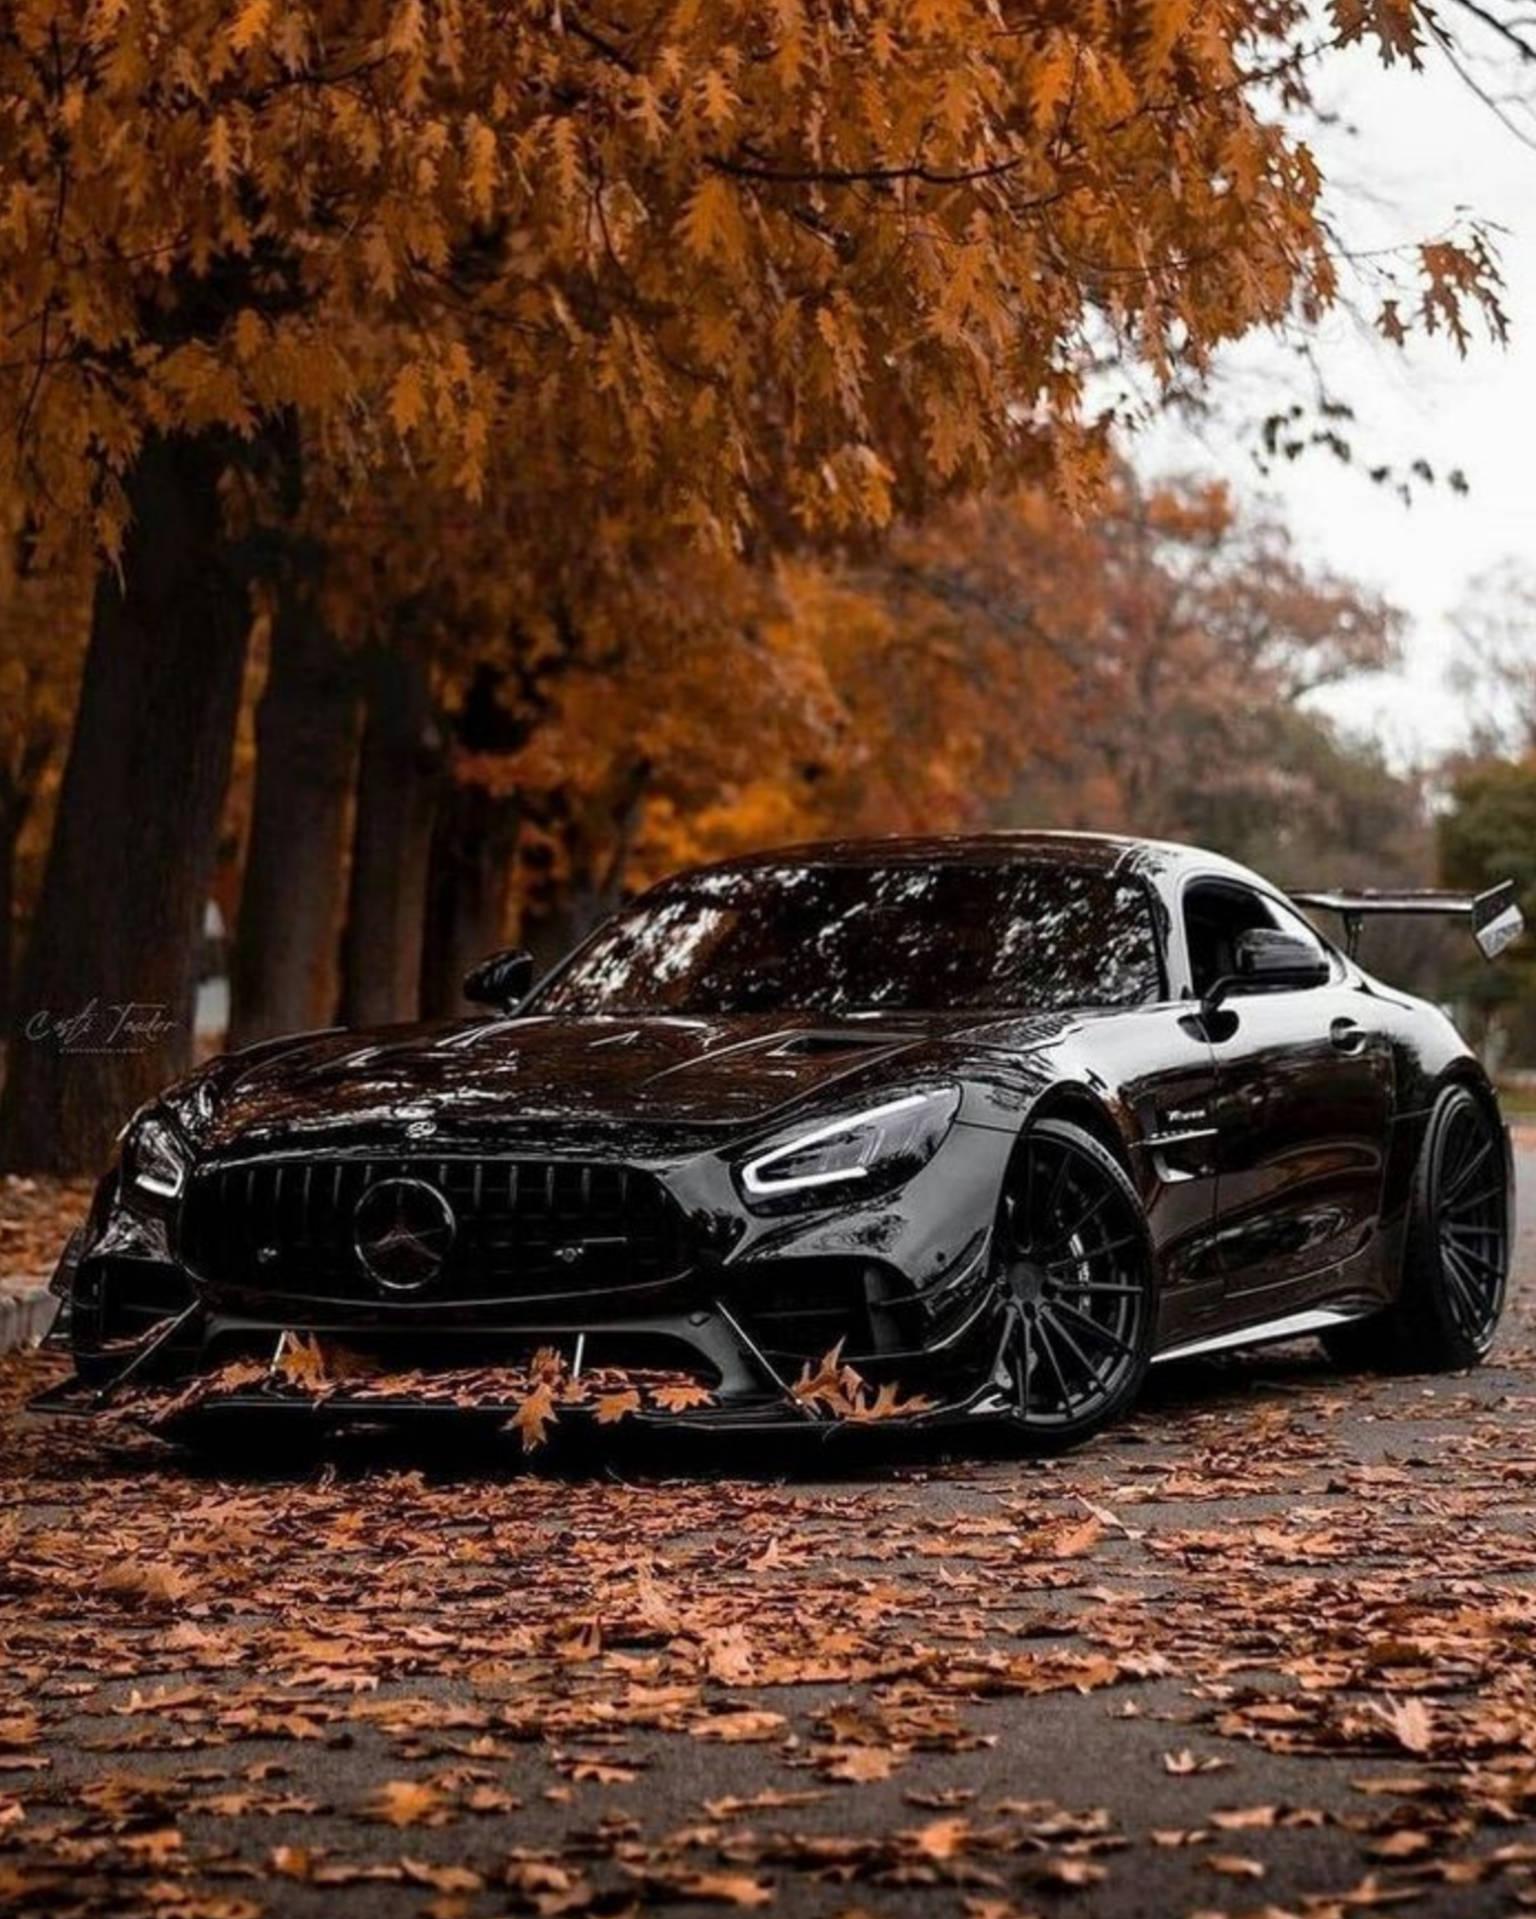 Sleek Black Mercedes Amg Gtr Showcasing Its Majestic